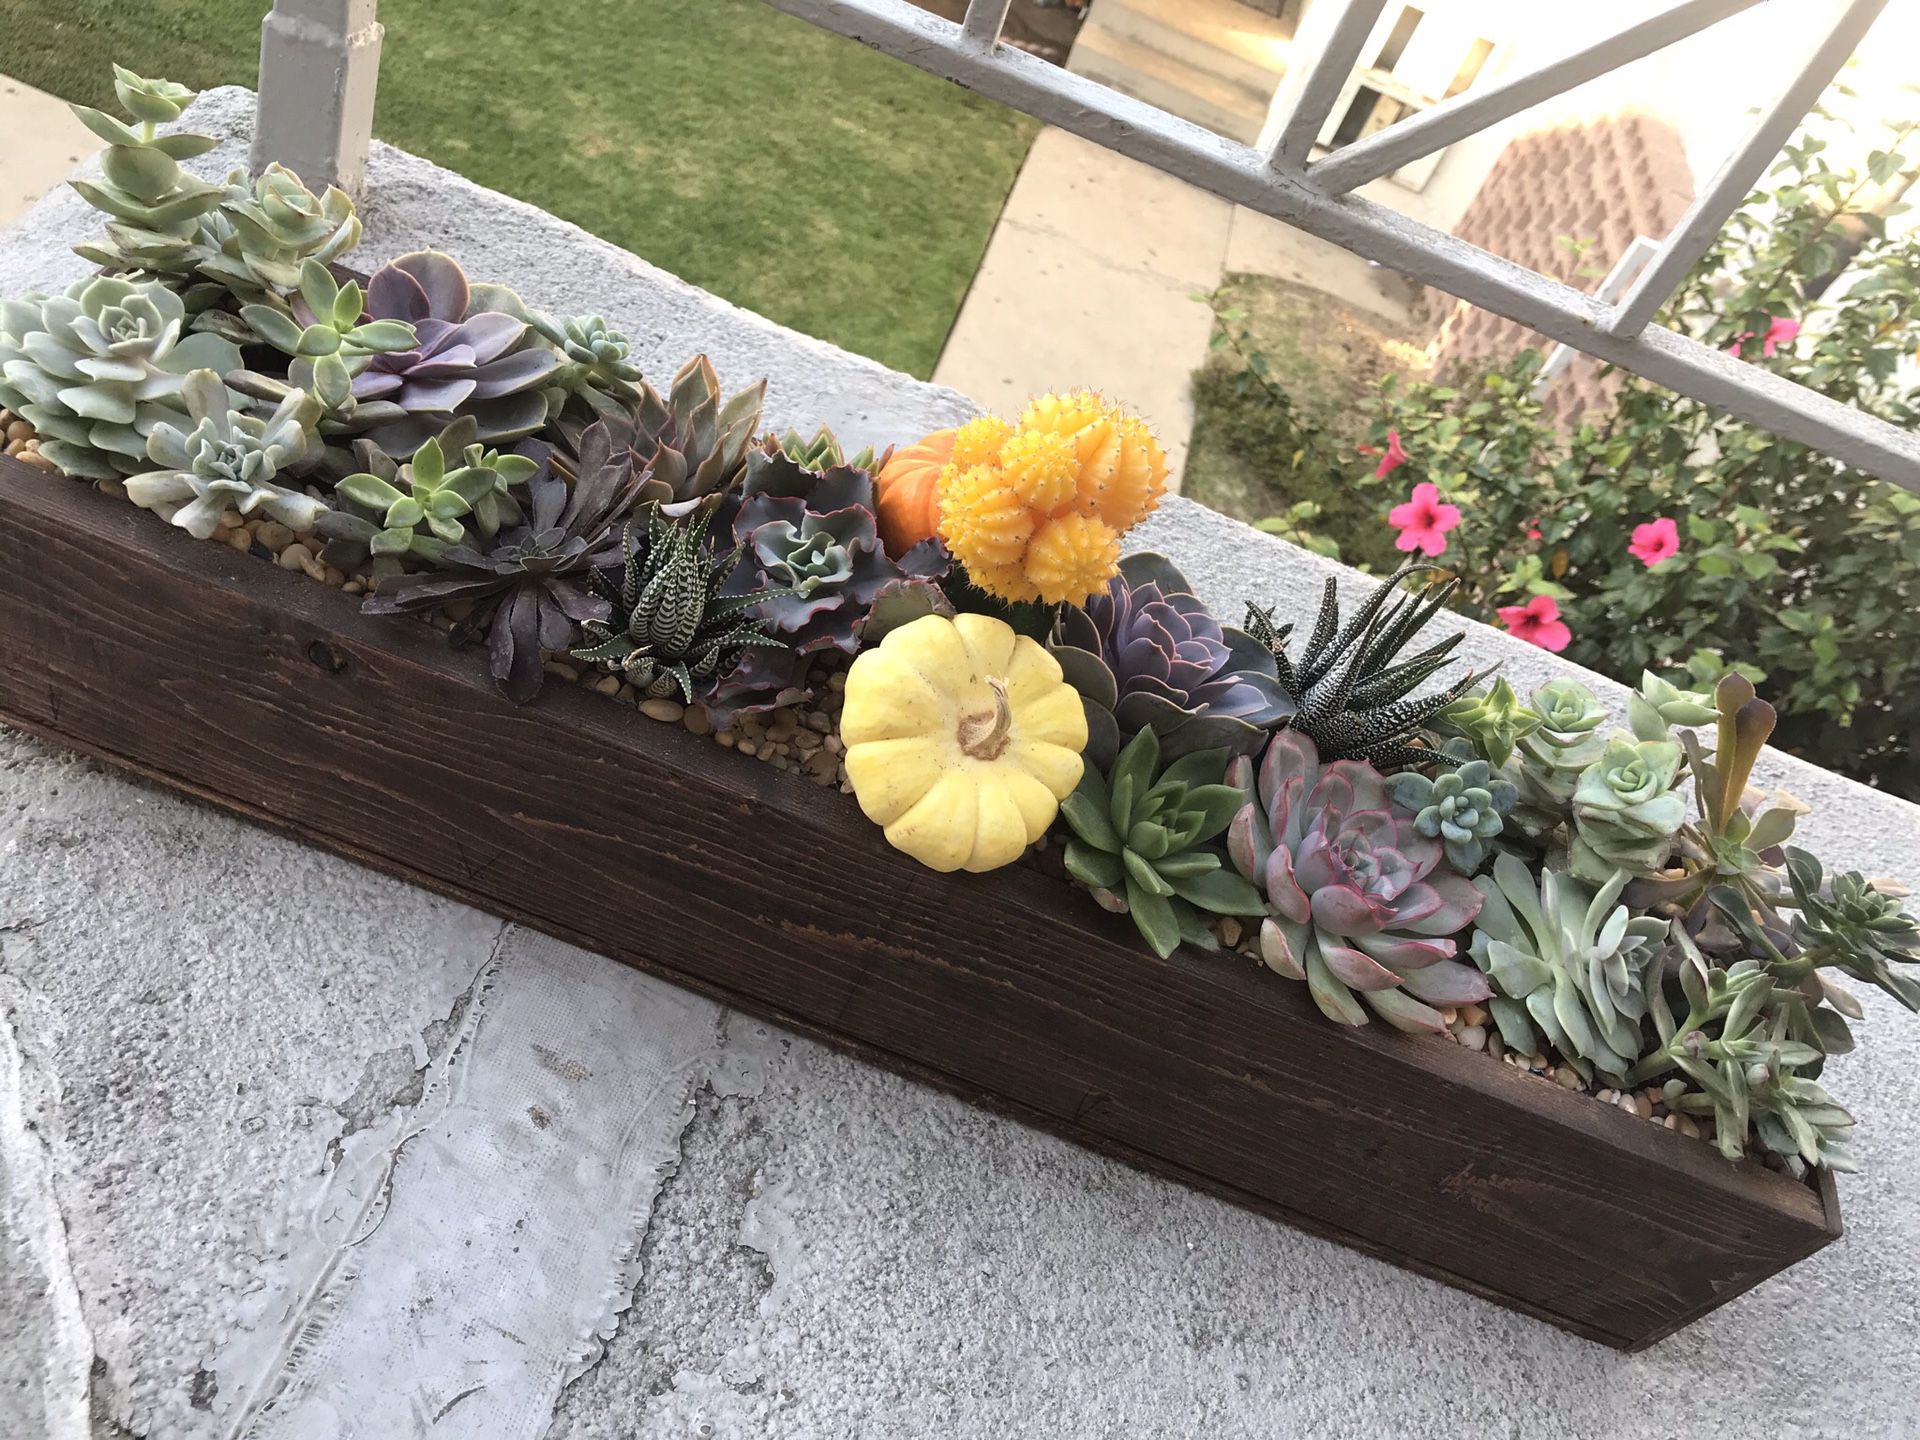 Succulent arrangement for Thanksgiving